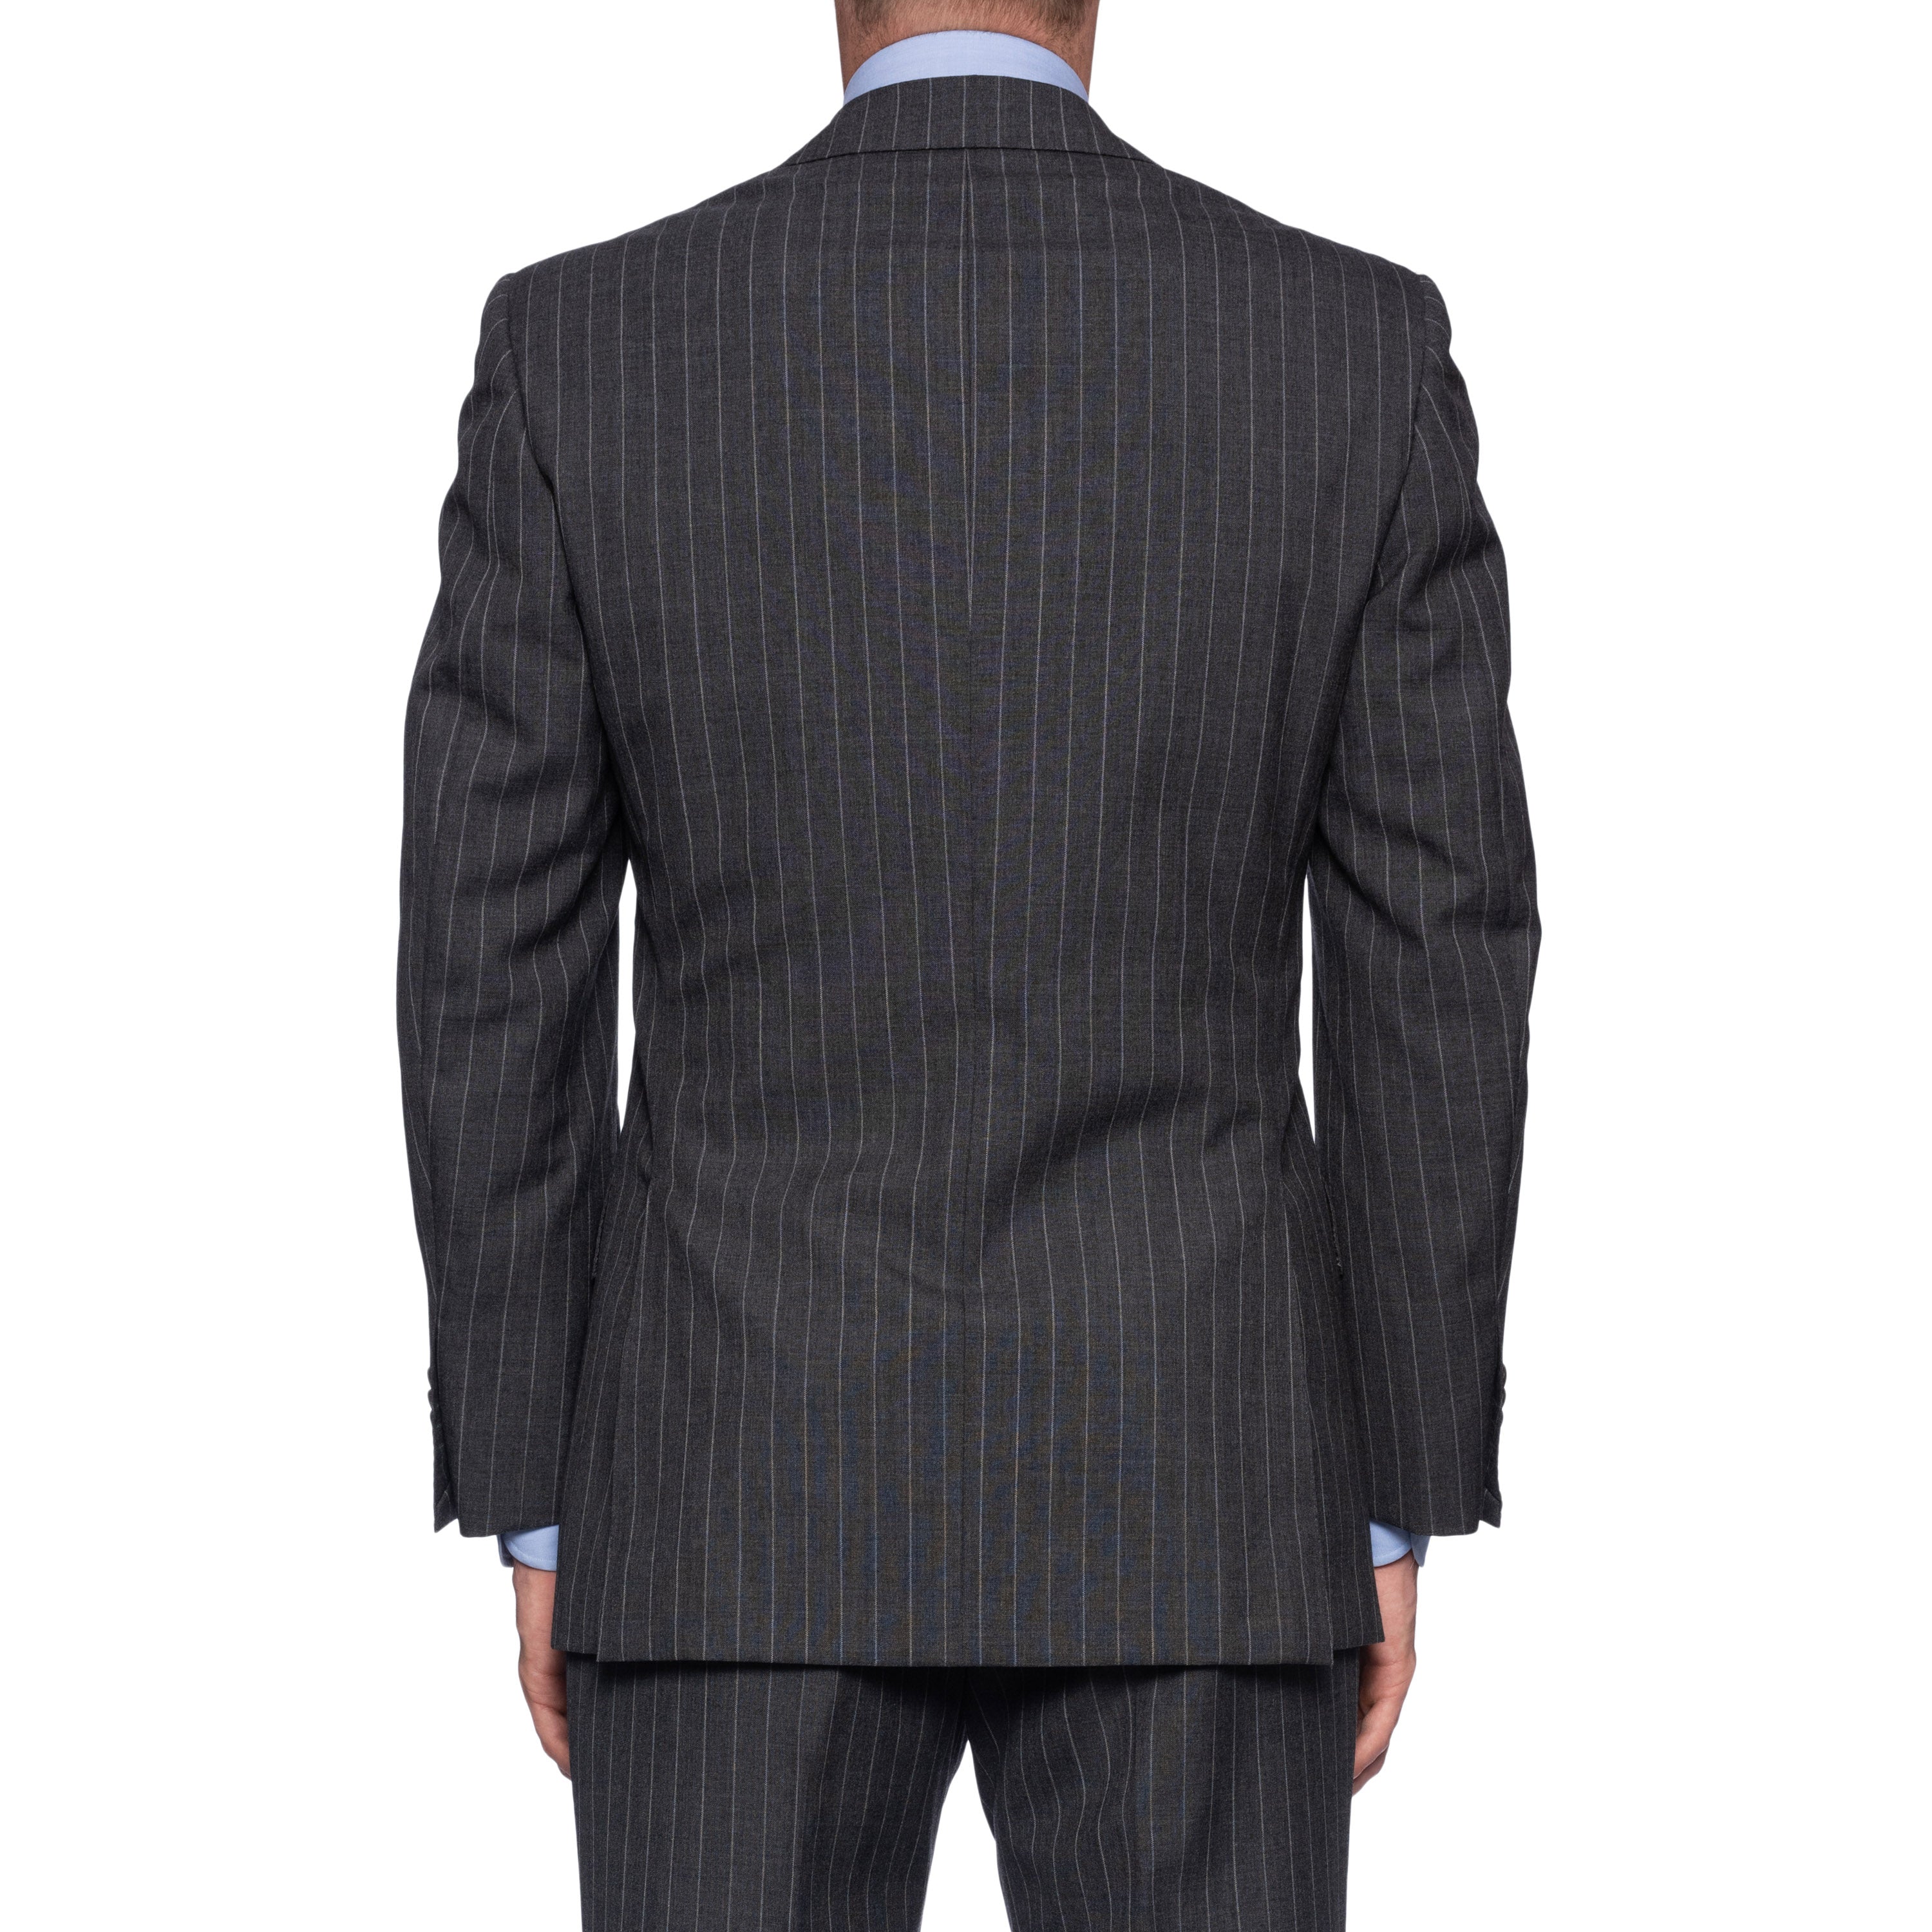 SARTORIA CASTANGIA Handmade Gray Striped Wool Business Suit NEW CASTANGIA